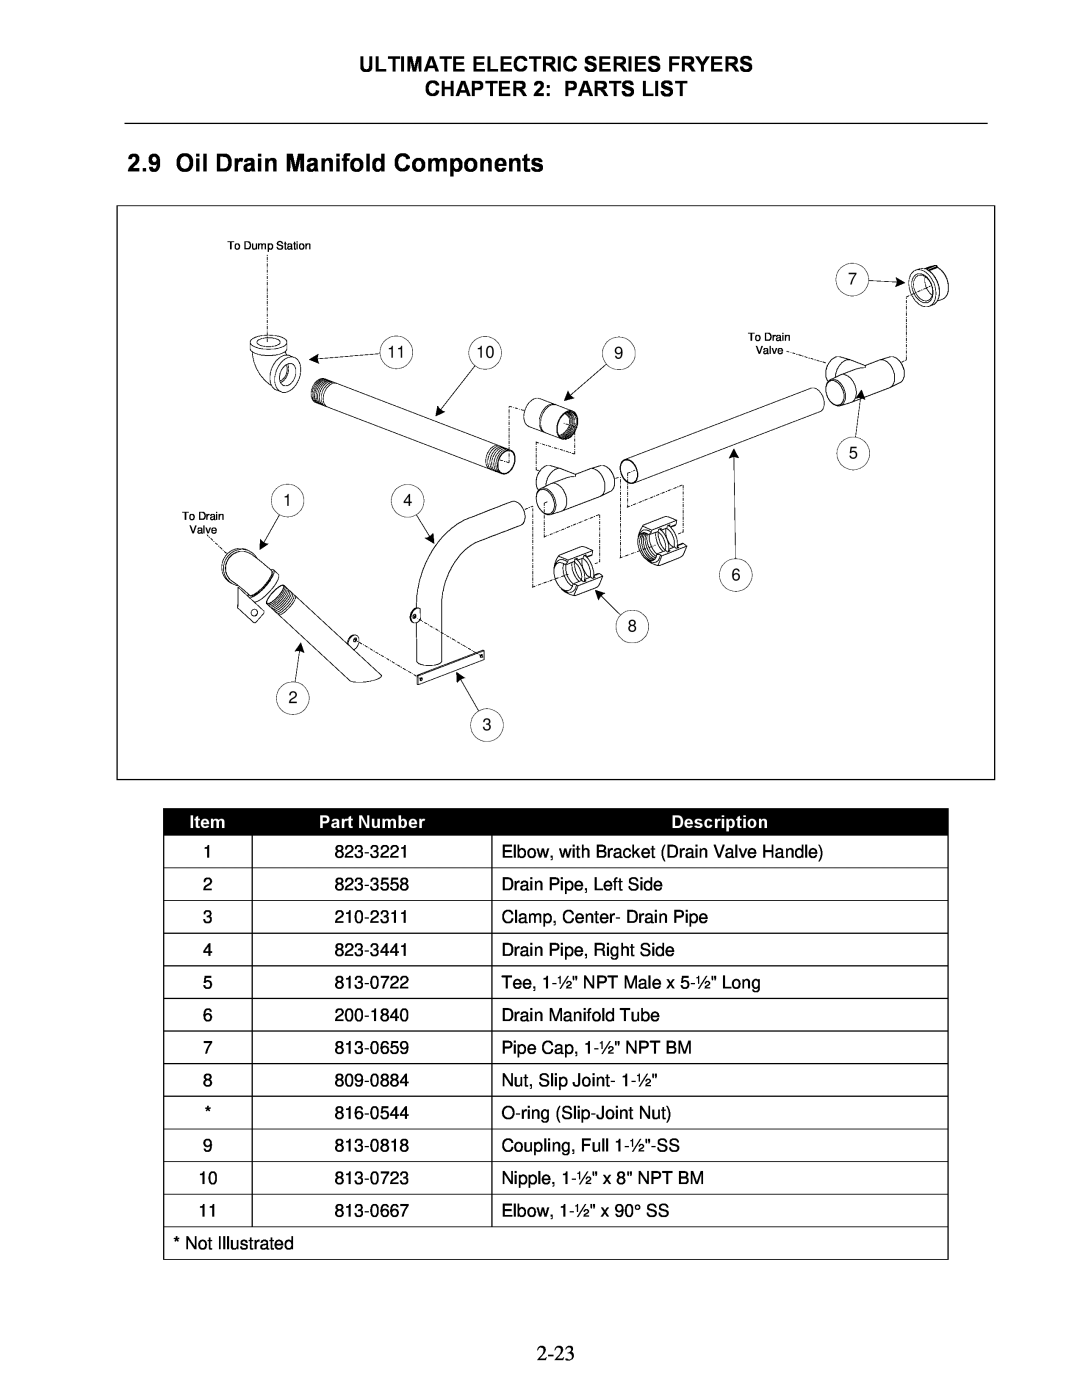 Frymaster manual Oil Drain Manifold Components, Ultimate Electric Series Fryers, Parts List, Part Number, Description 